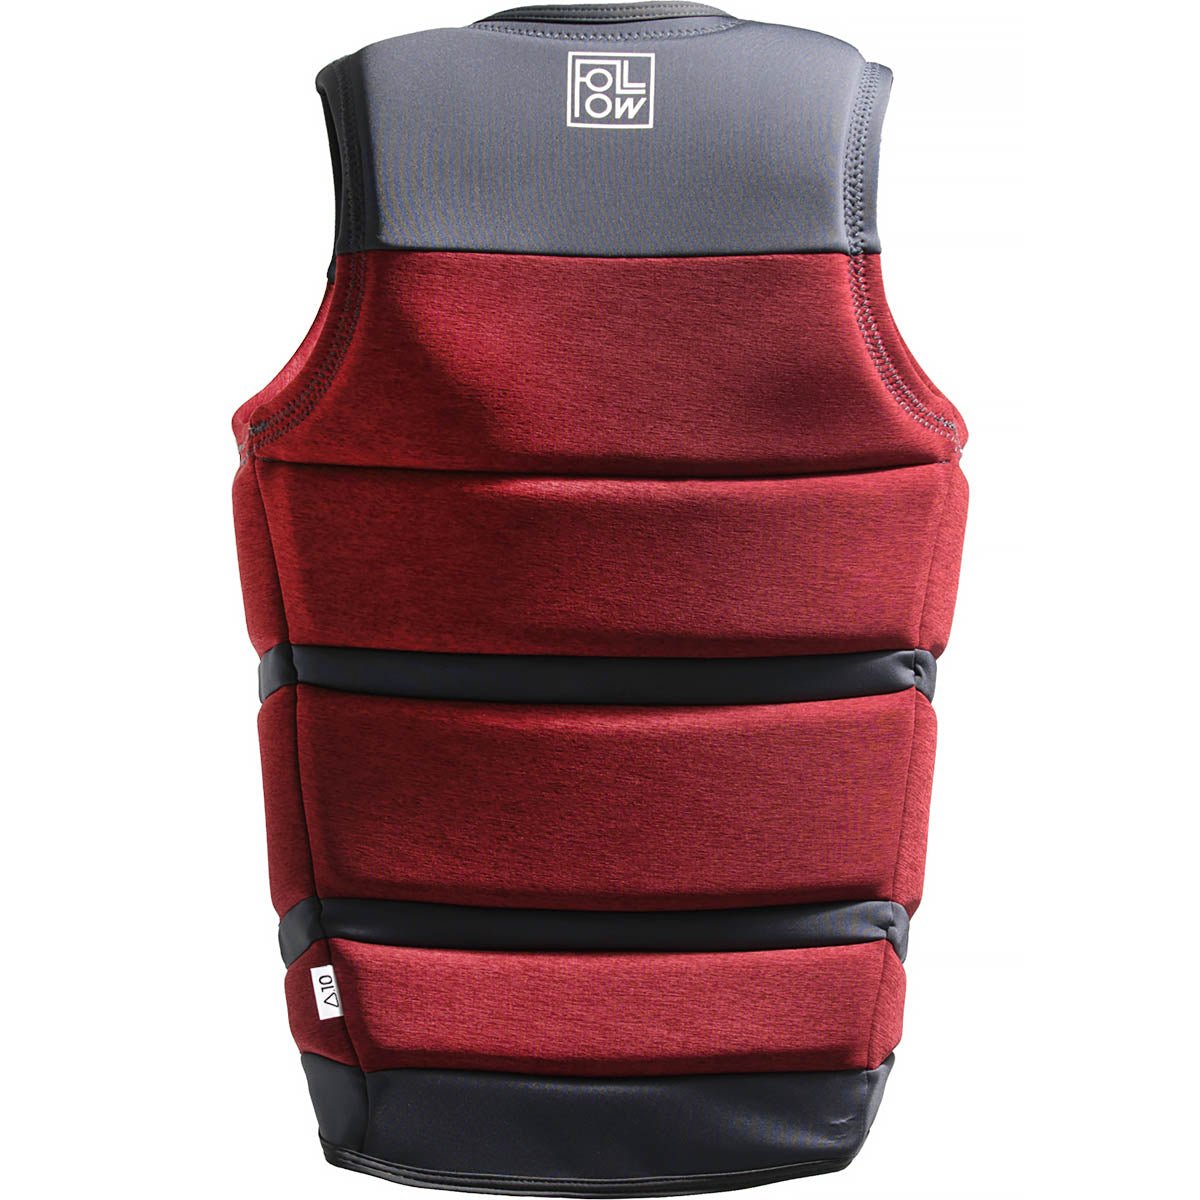 Follow Surf Edition Comp Wake Vest in Red Wine - BoardCo